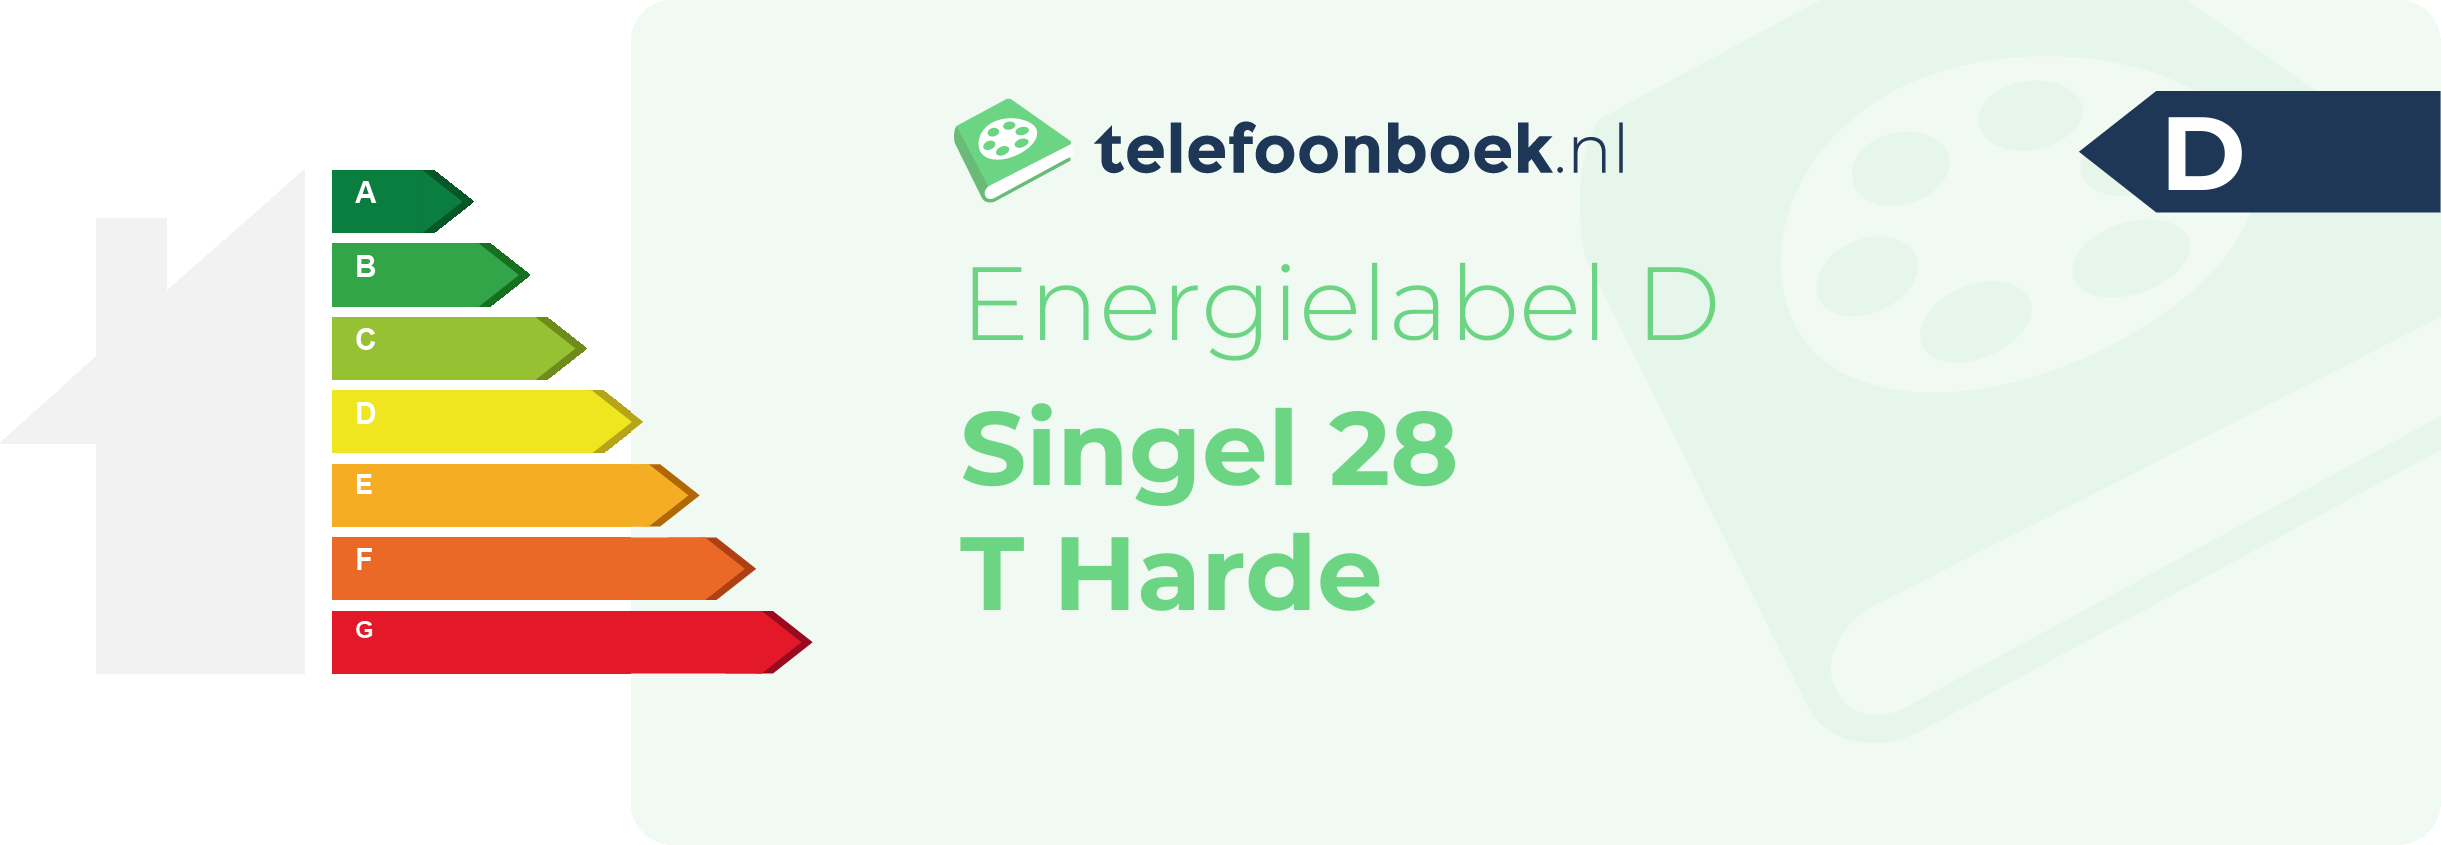 Energielabel Singel 28 T Harde